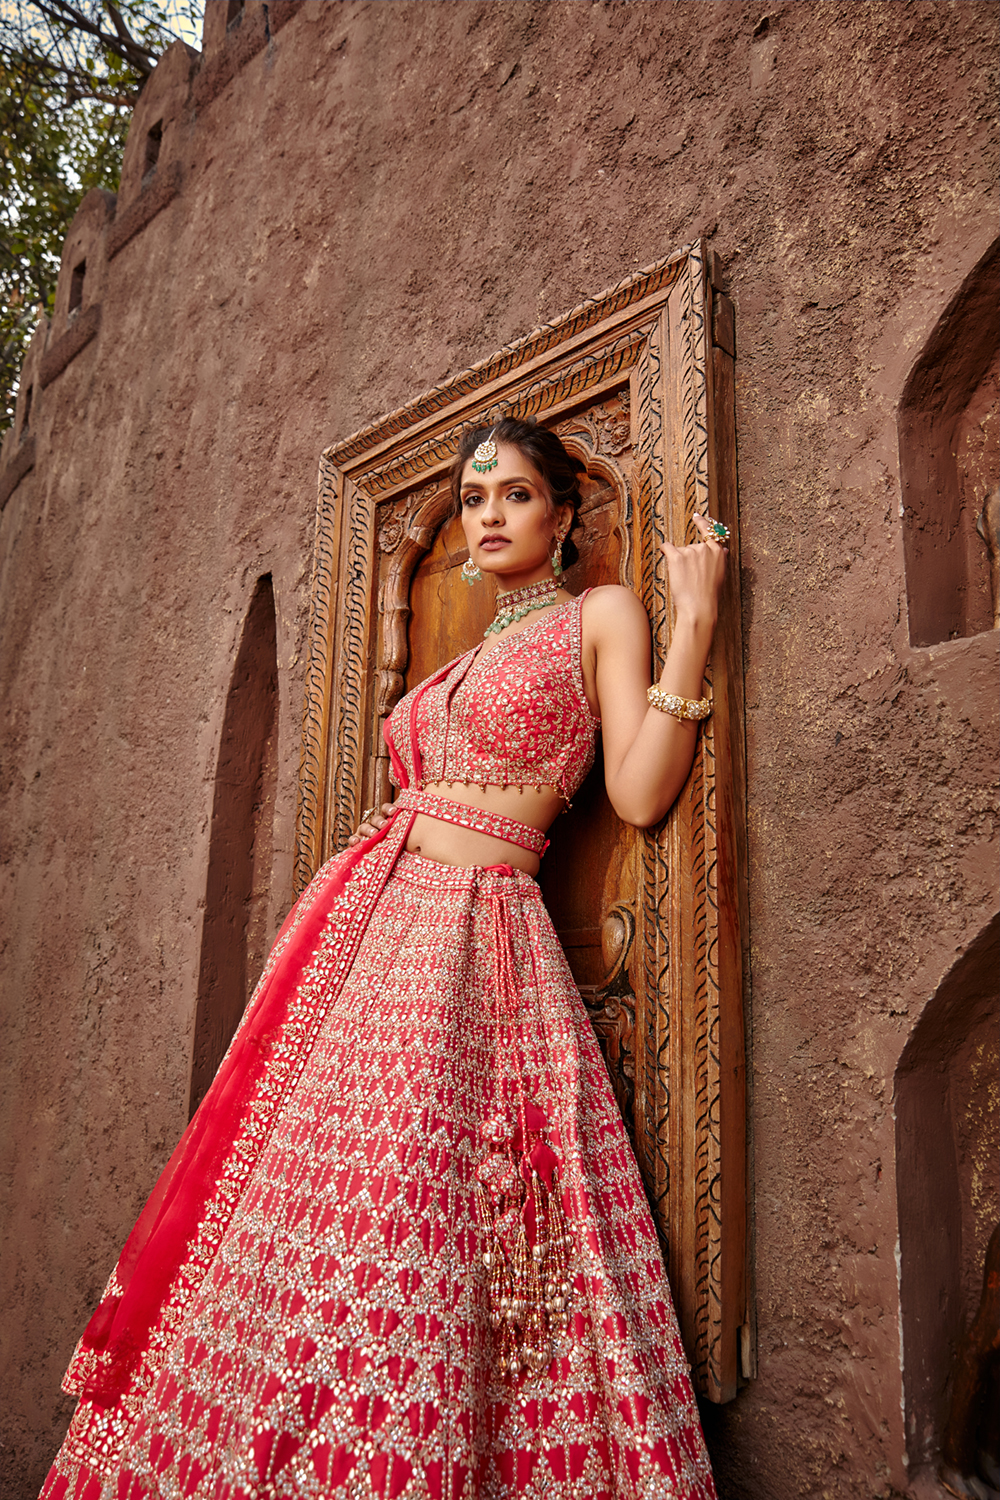 Nitika Gujral, Bridal Lehengas,Saris & Wedding Outfits, Delhi